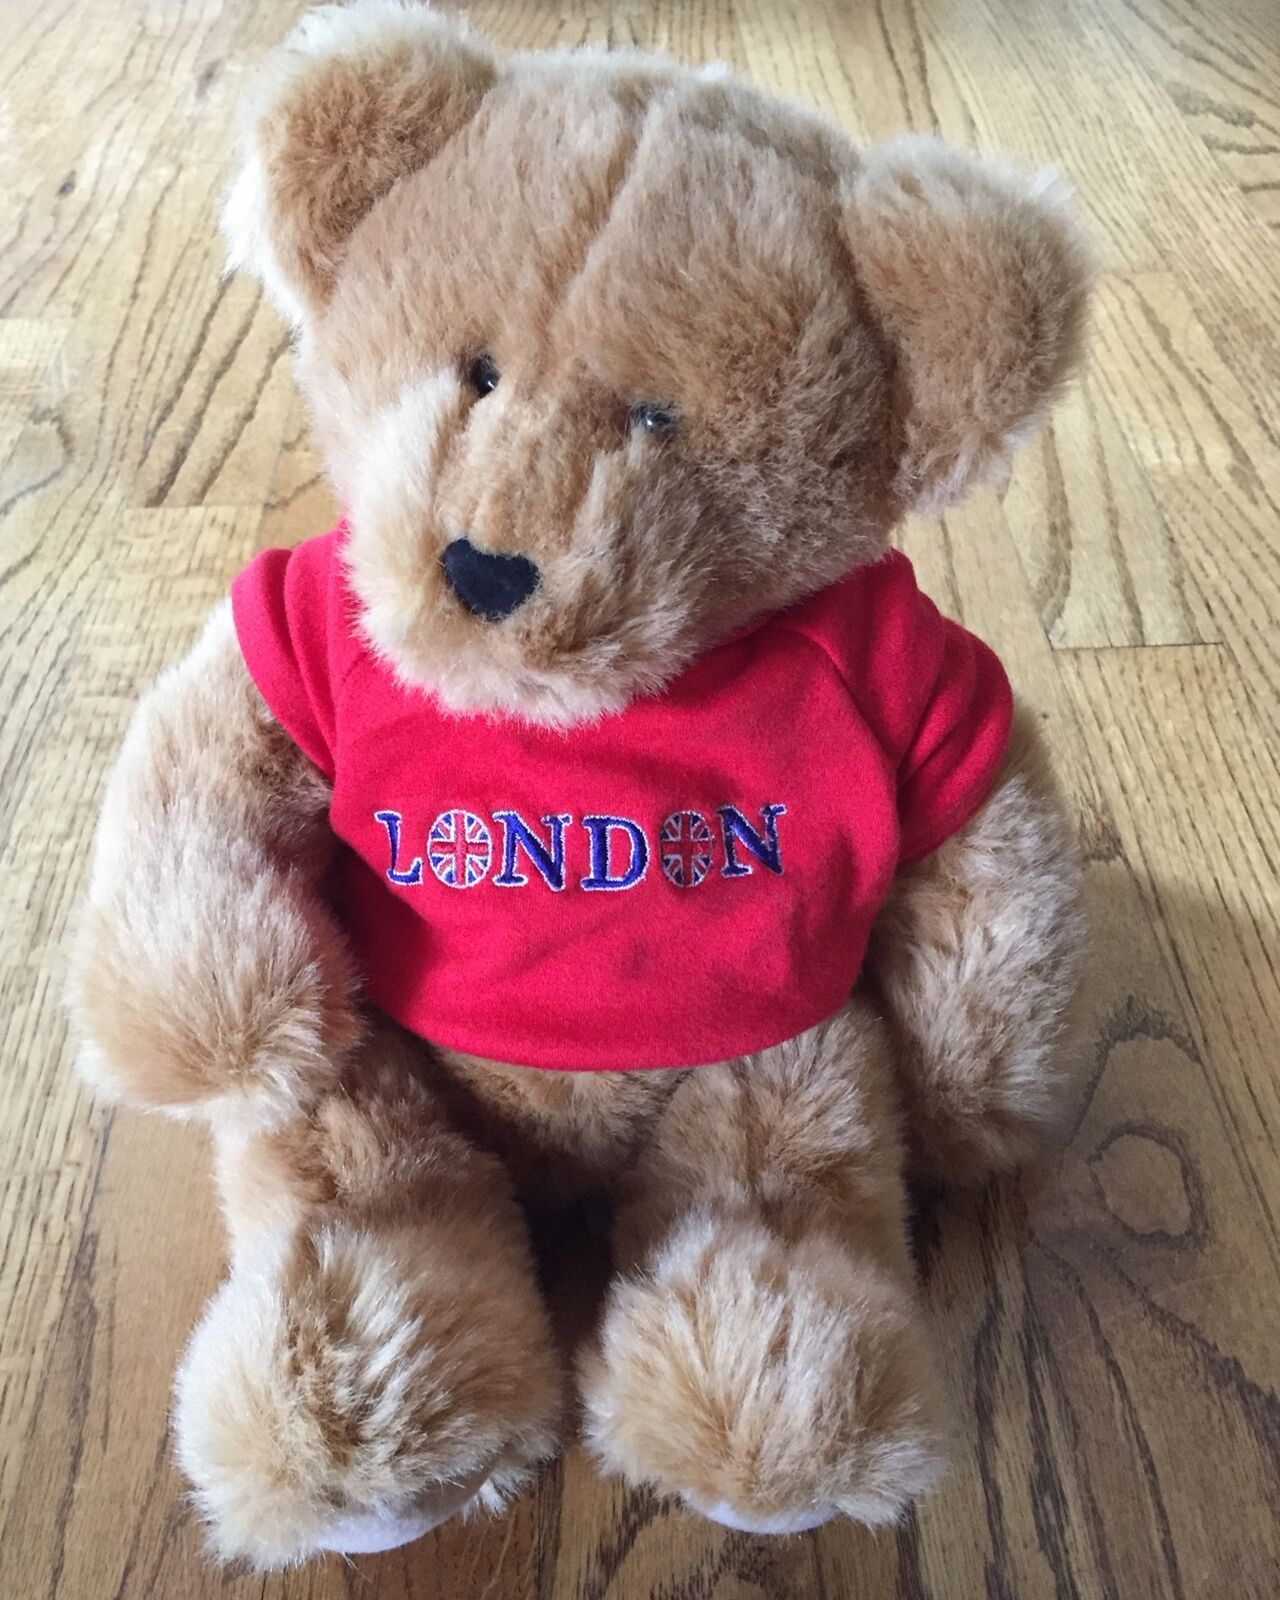 Harrods London Teddy Bear Plush T-Shirt Souvenir Stuffed Toy Animal  Free ship